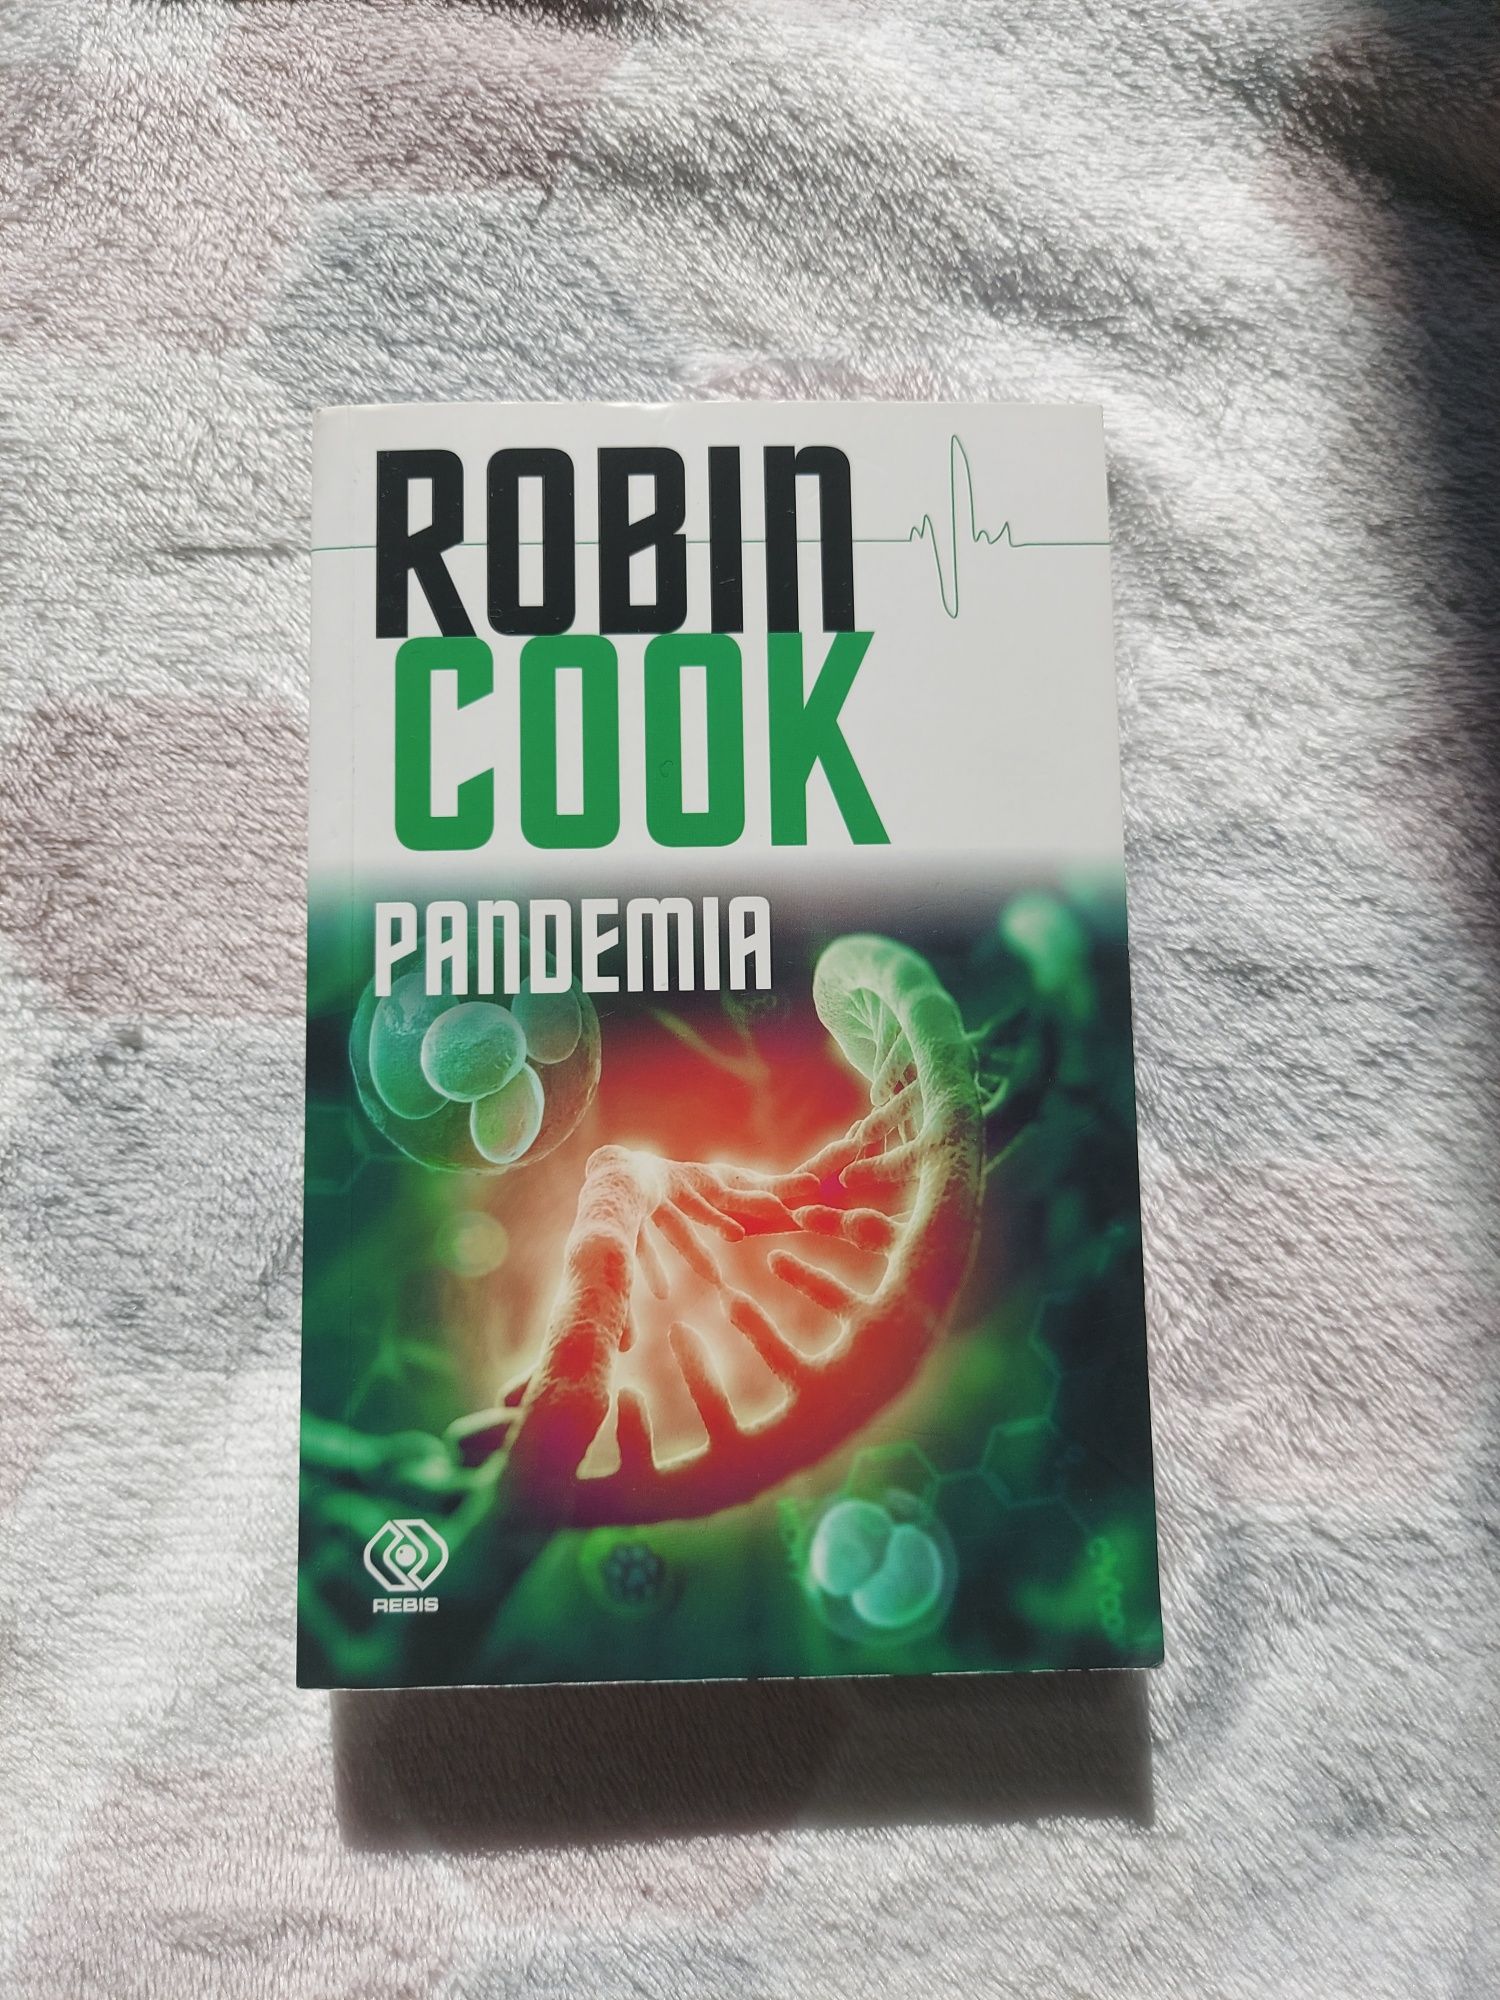 Robin Cook "Pandemia"